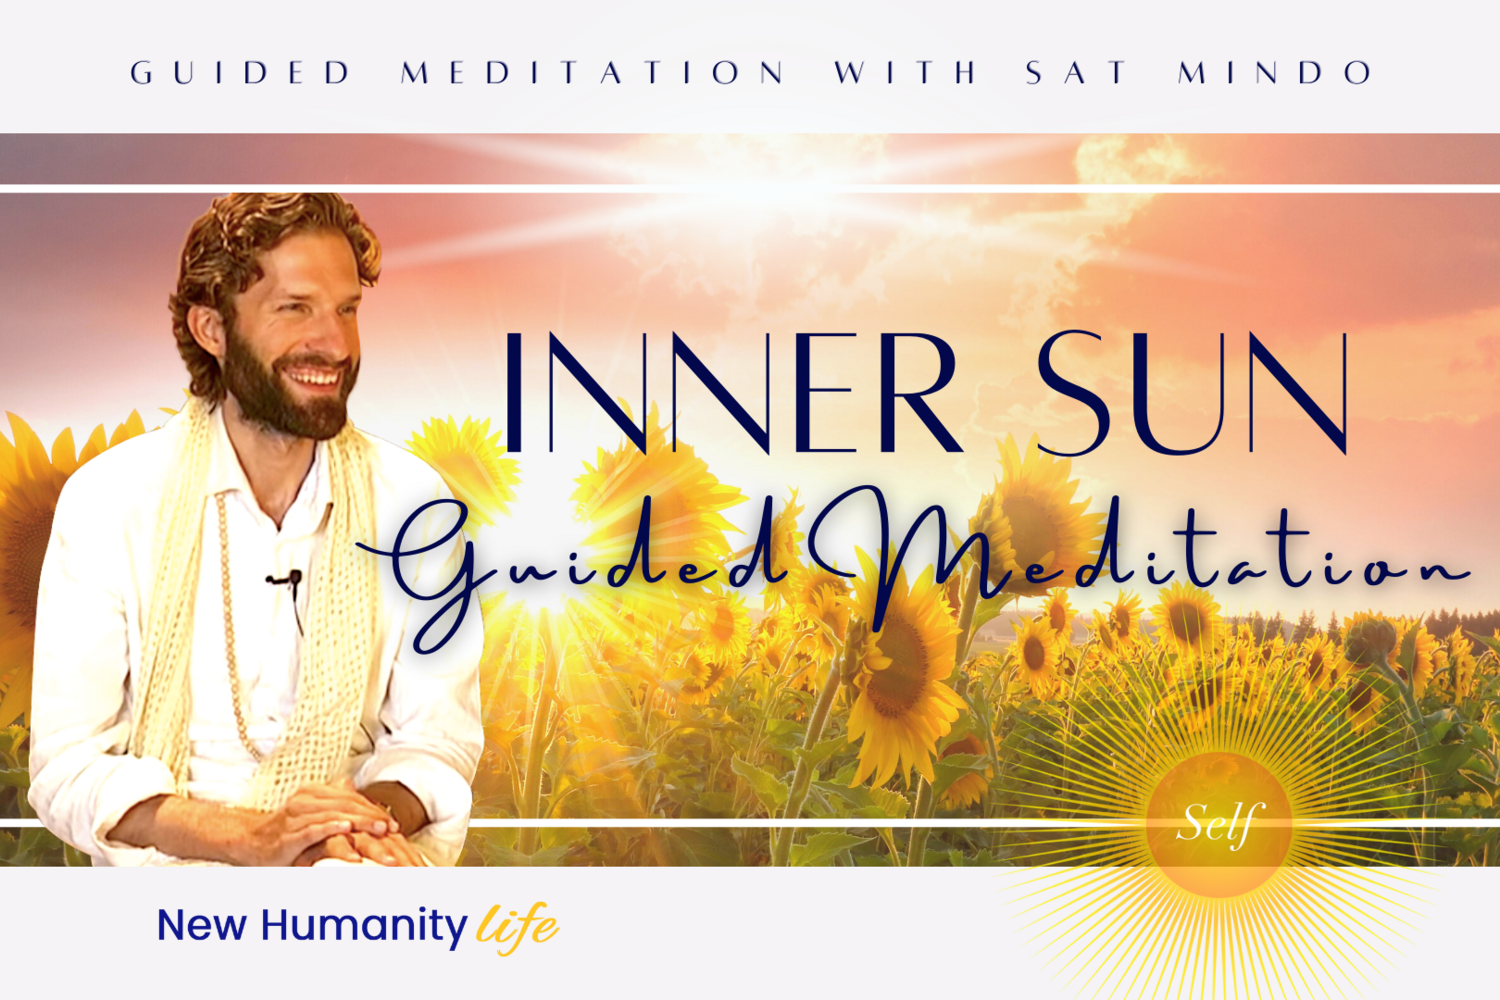 Inner Sun Heart on the Right Guided Meditation